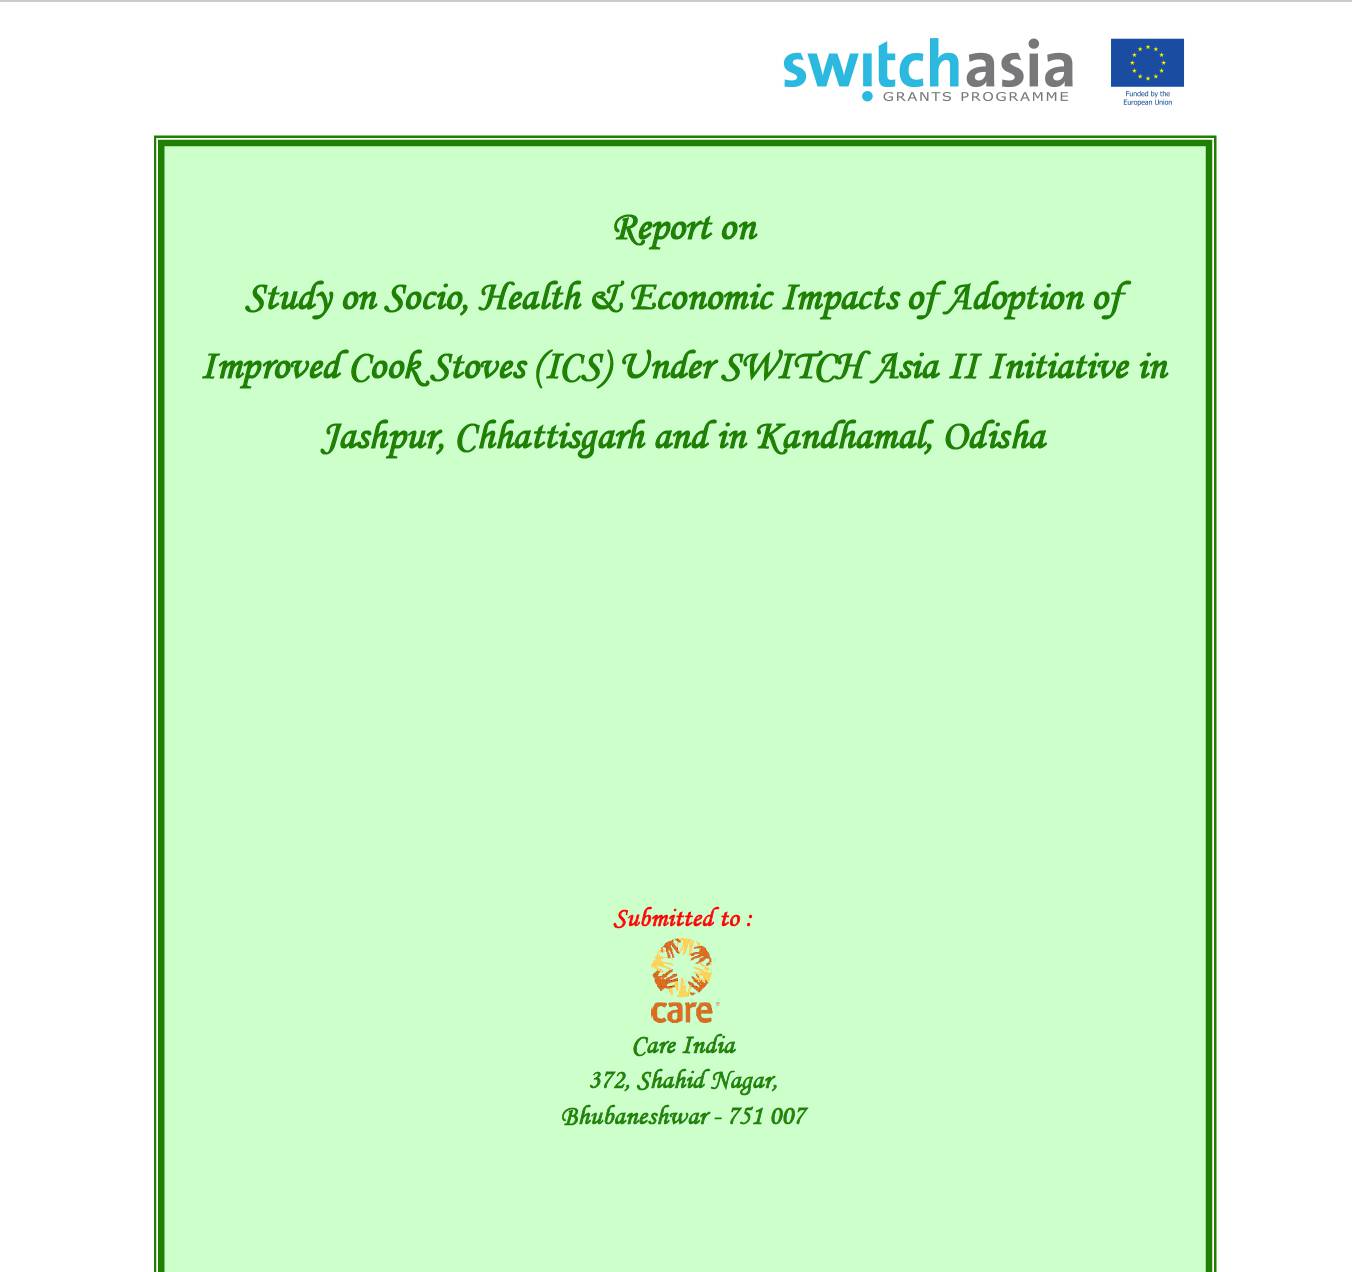 Study on Socio, Health & Economic Impacts of Adoption of ICS